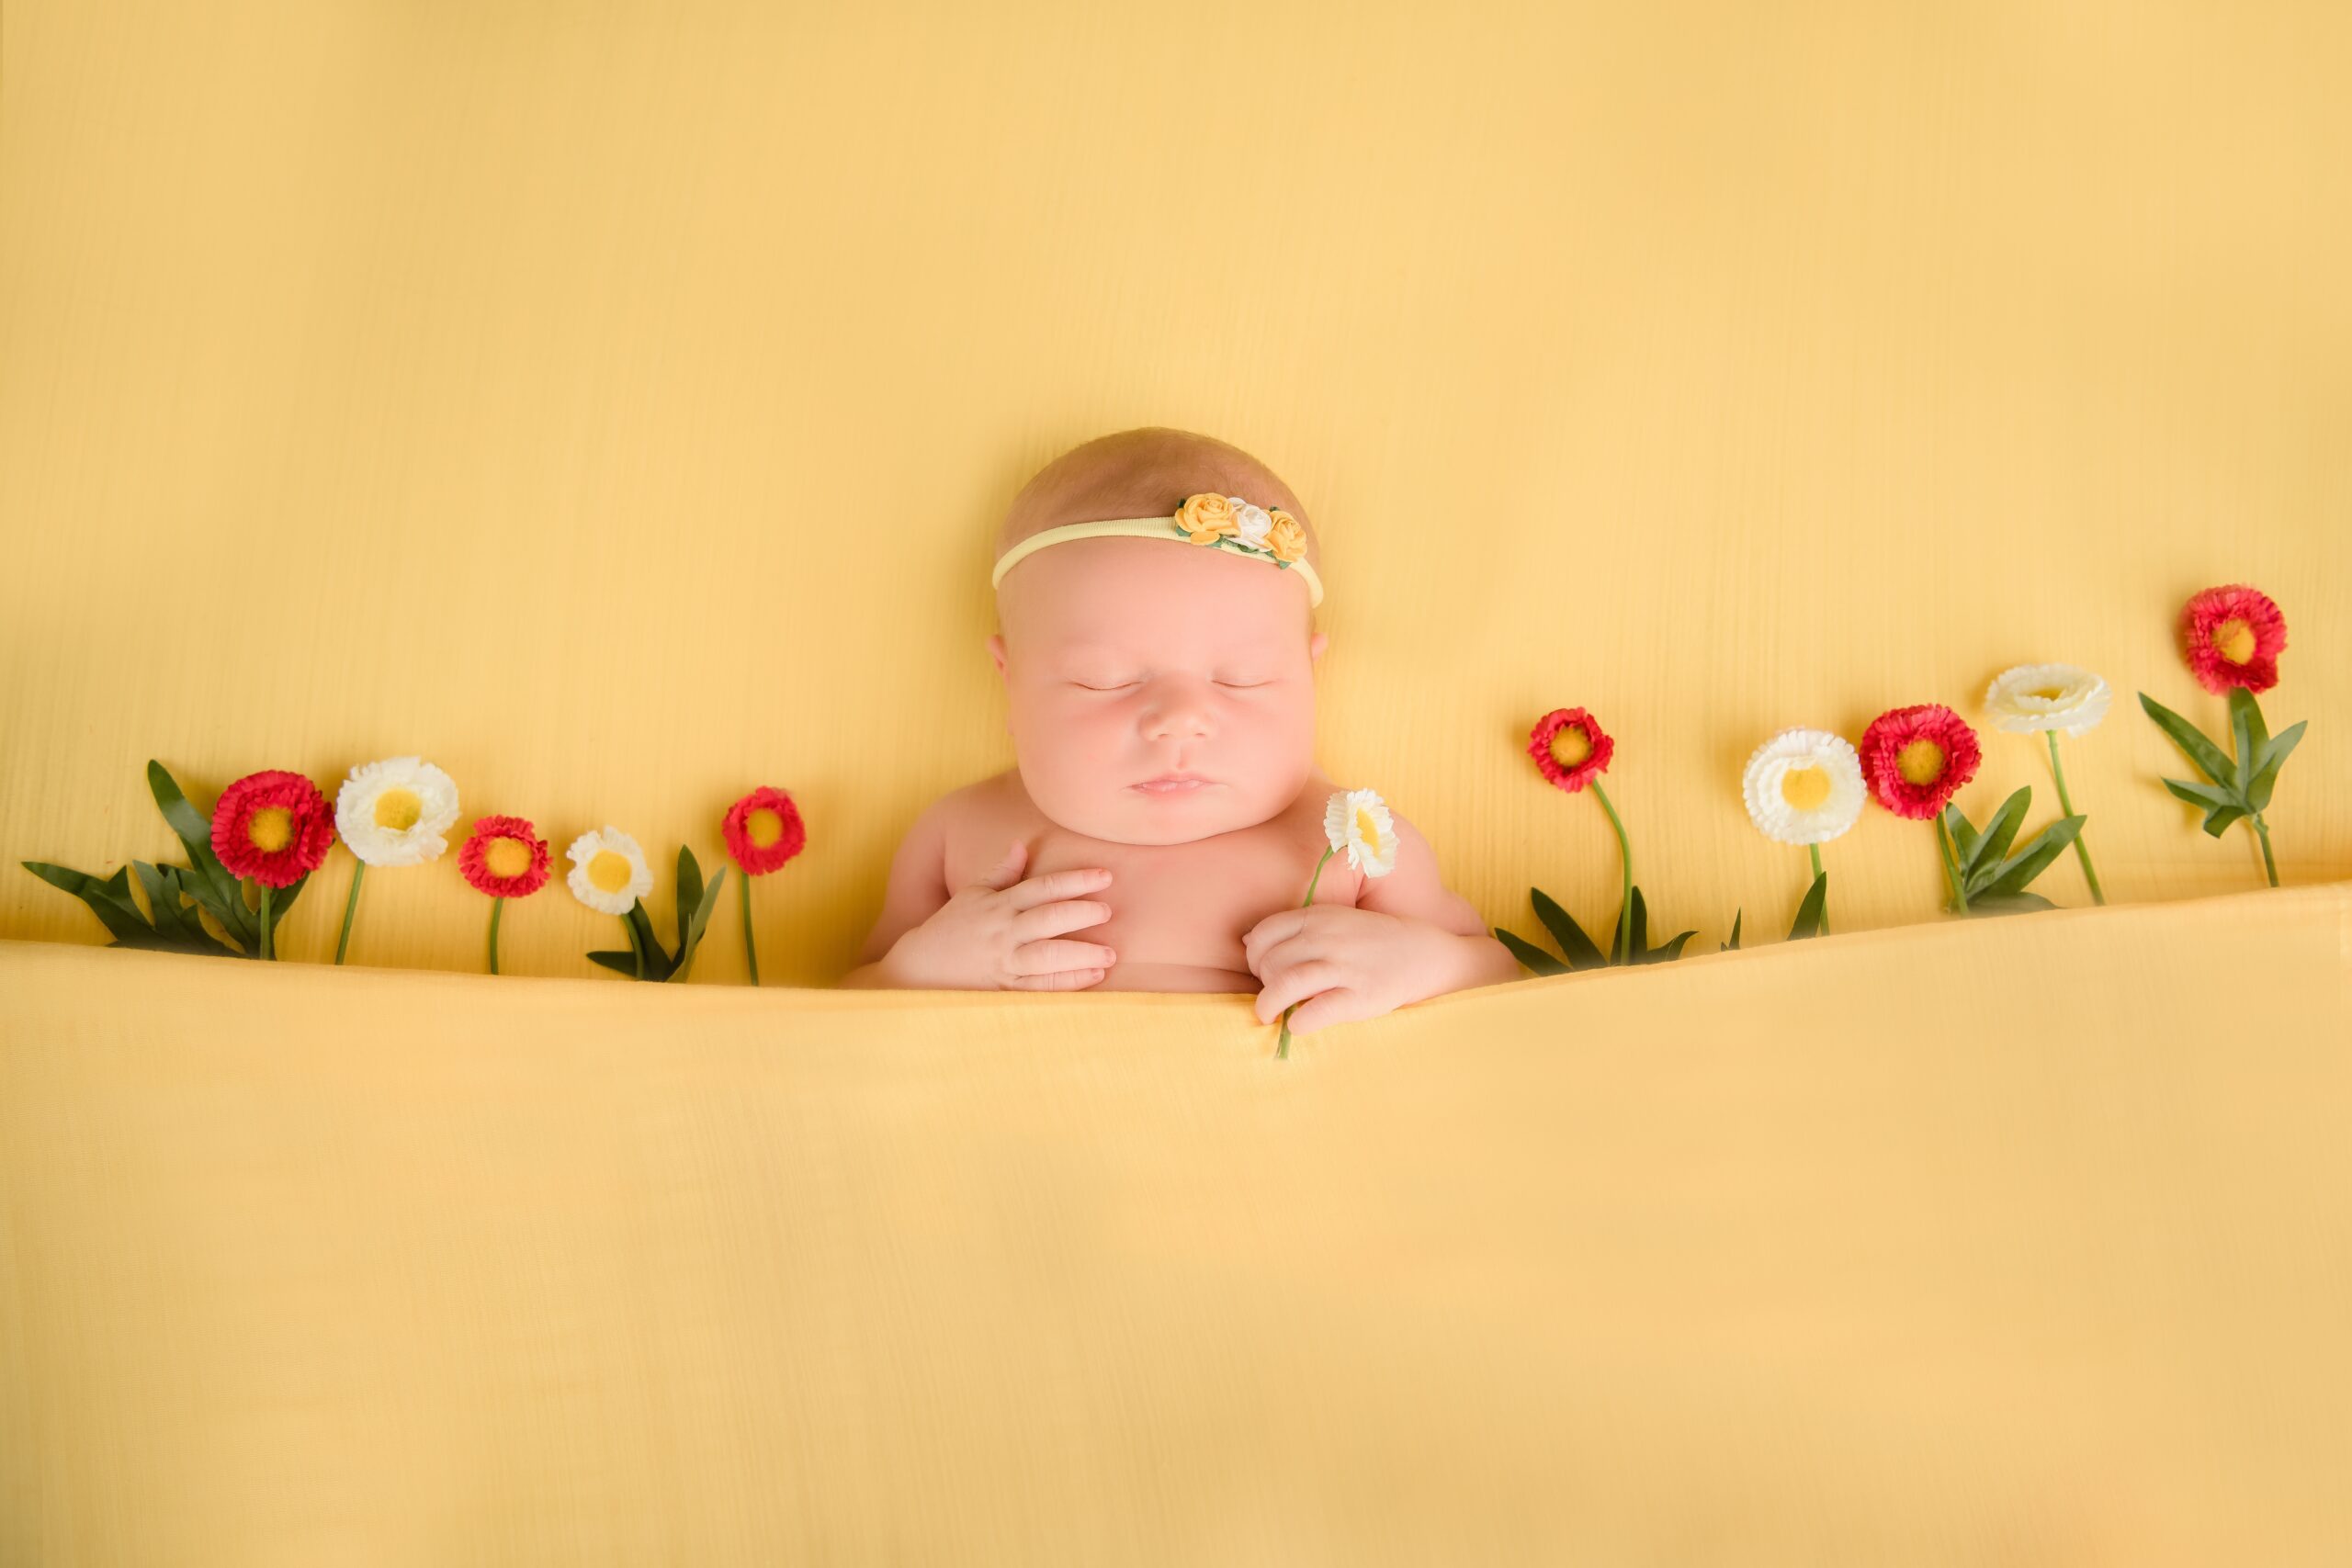 20210421  85S8730 Edit Edit scaled - Portfolio: Infant Photography